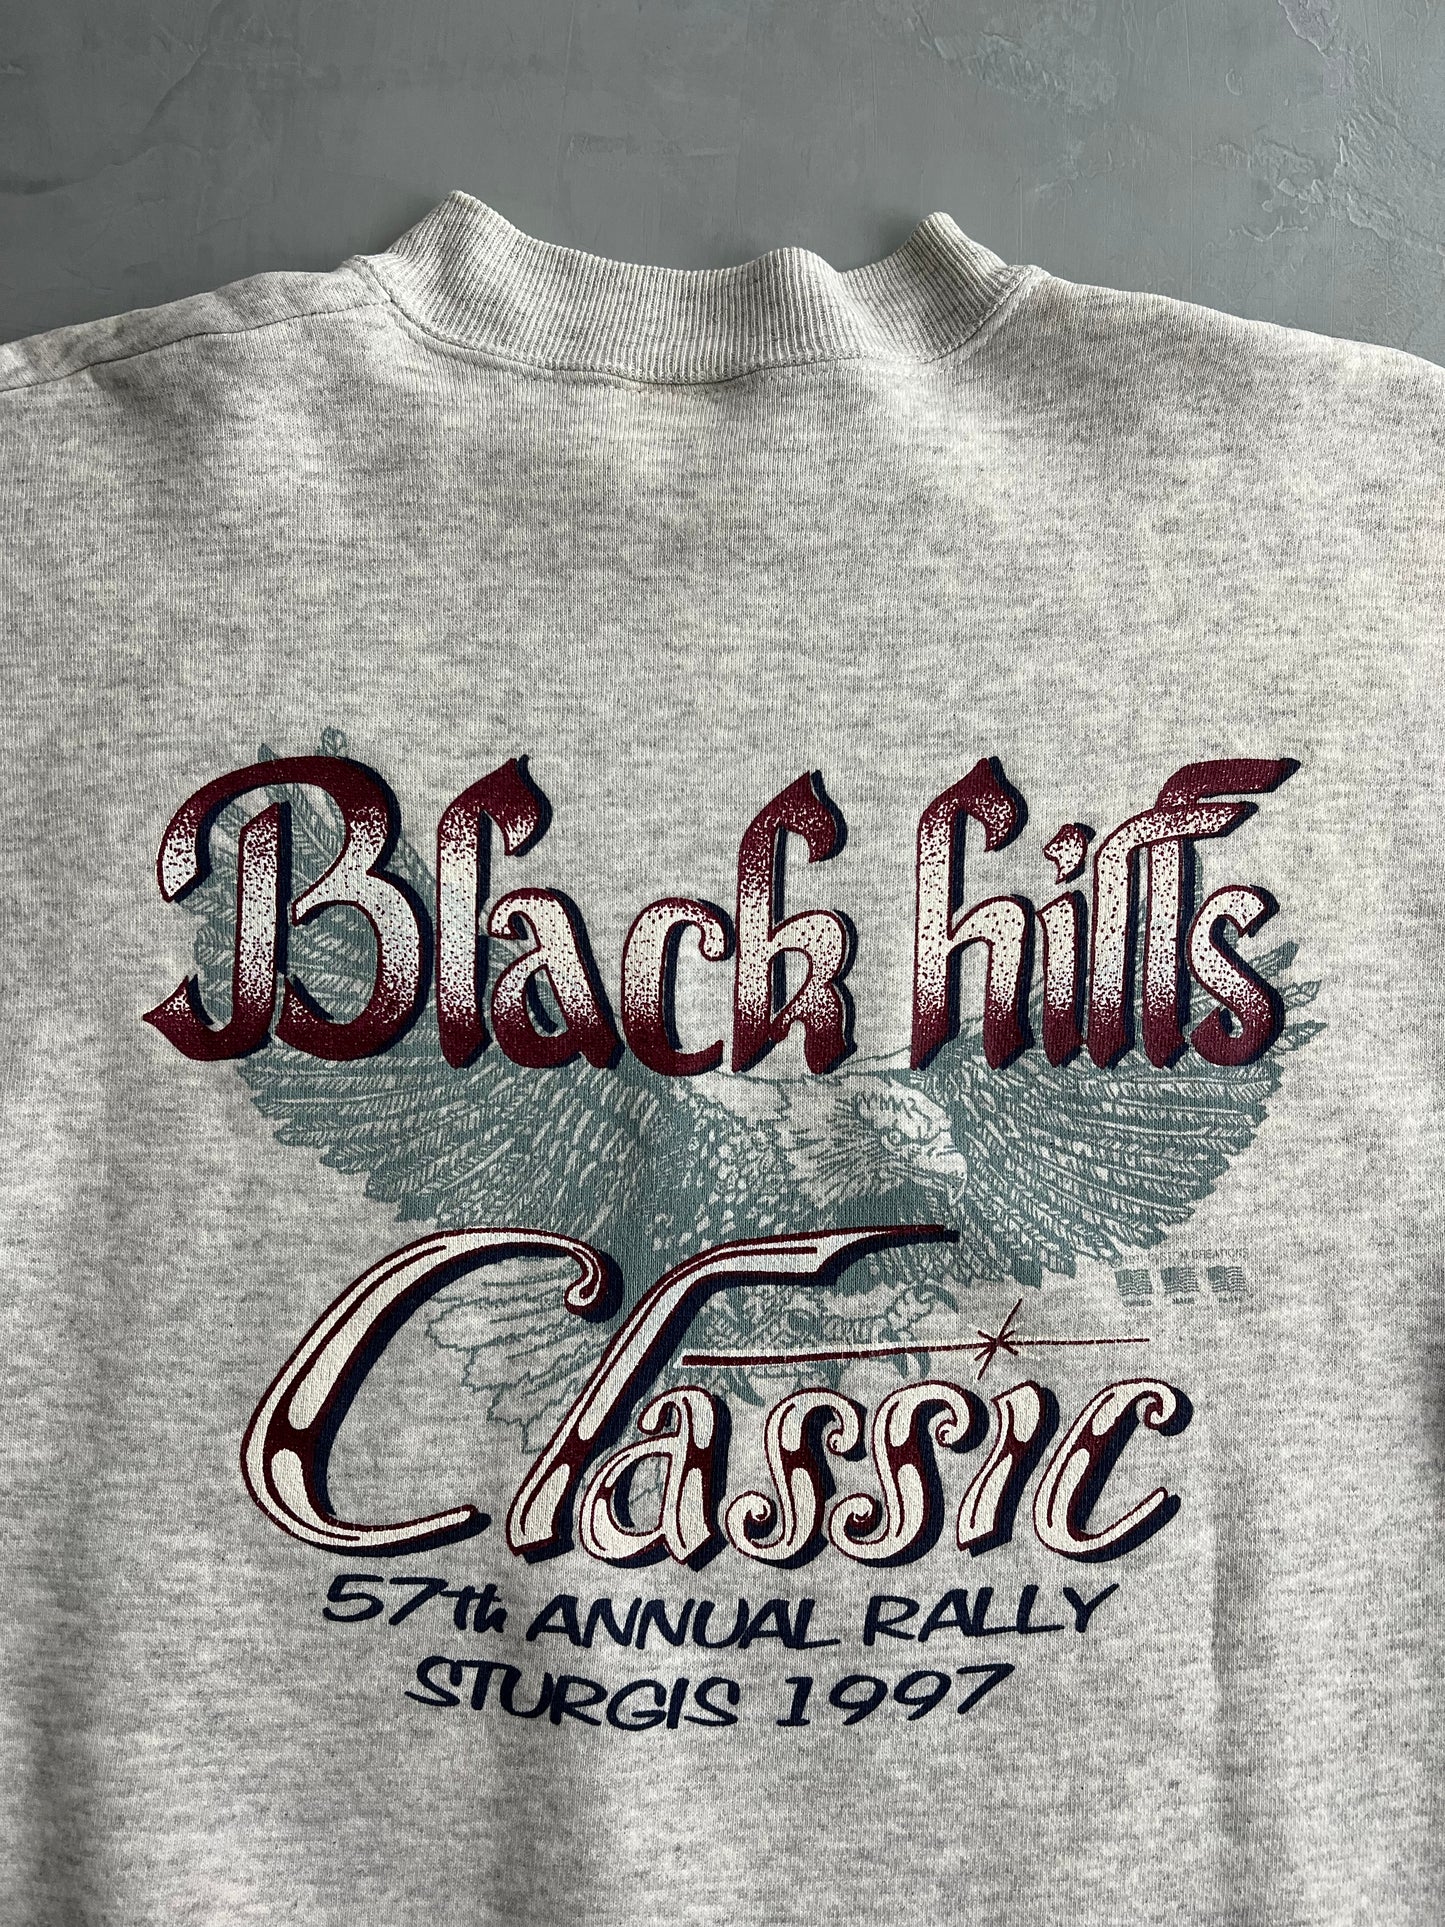 '97 Sturges Black Hills Classic Sweatshirt [M]